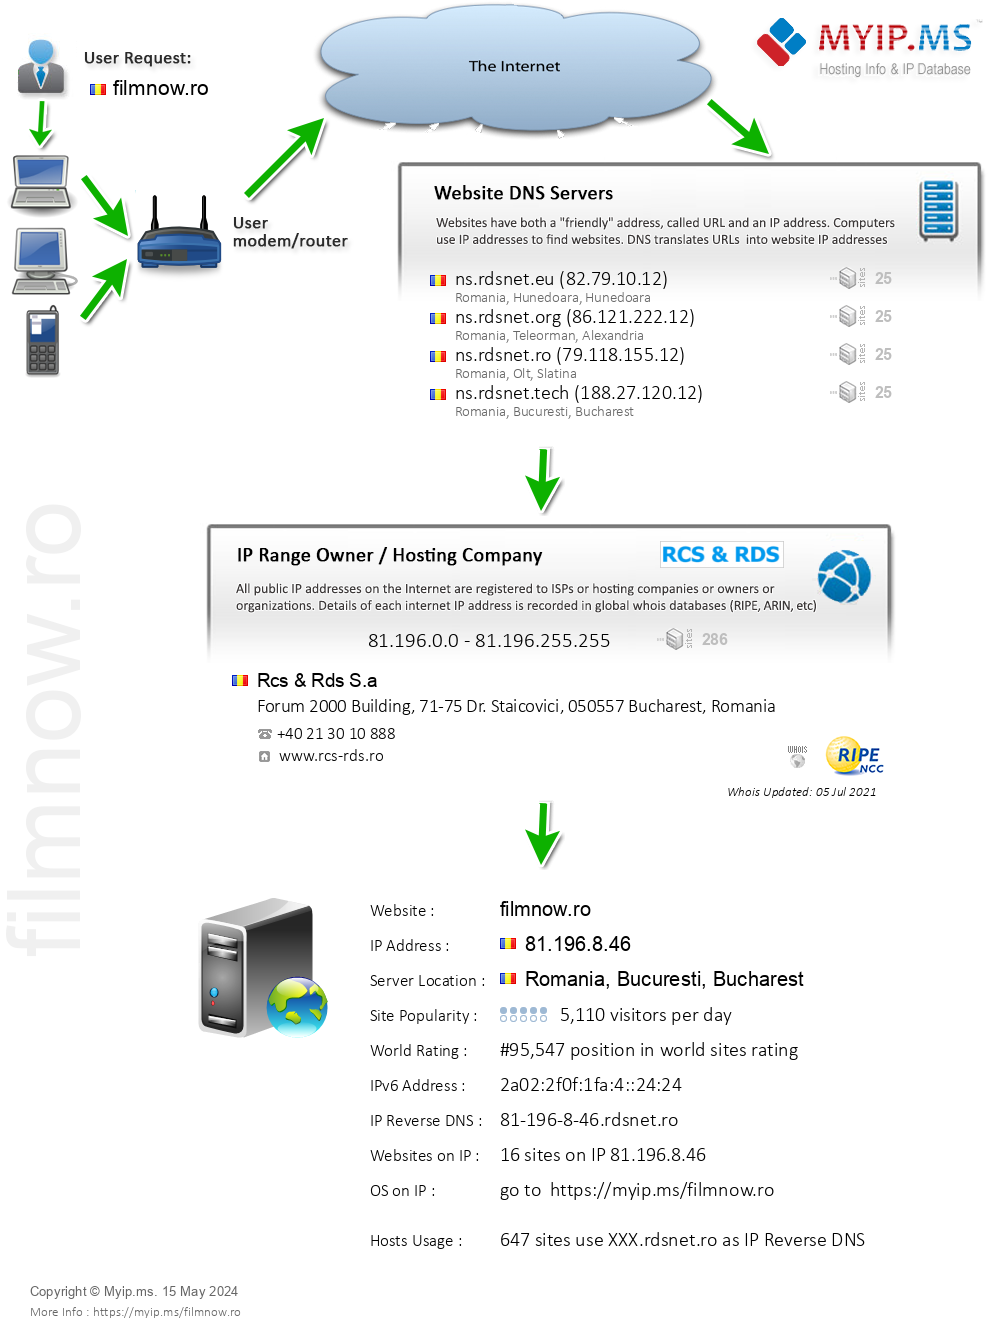 Filmnow.ro - Website Hosting Visual IP Diagram